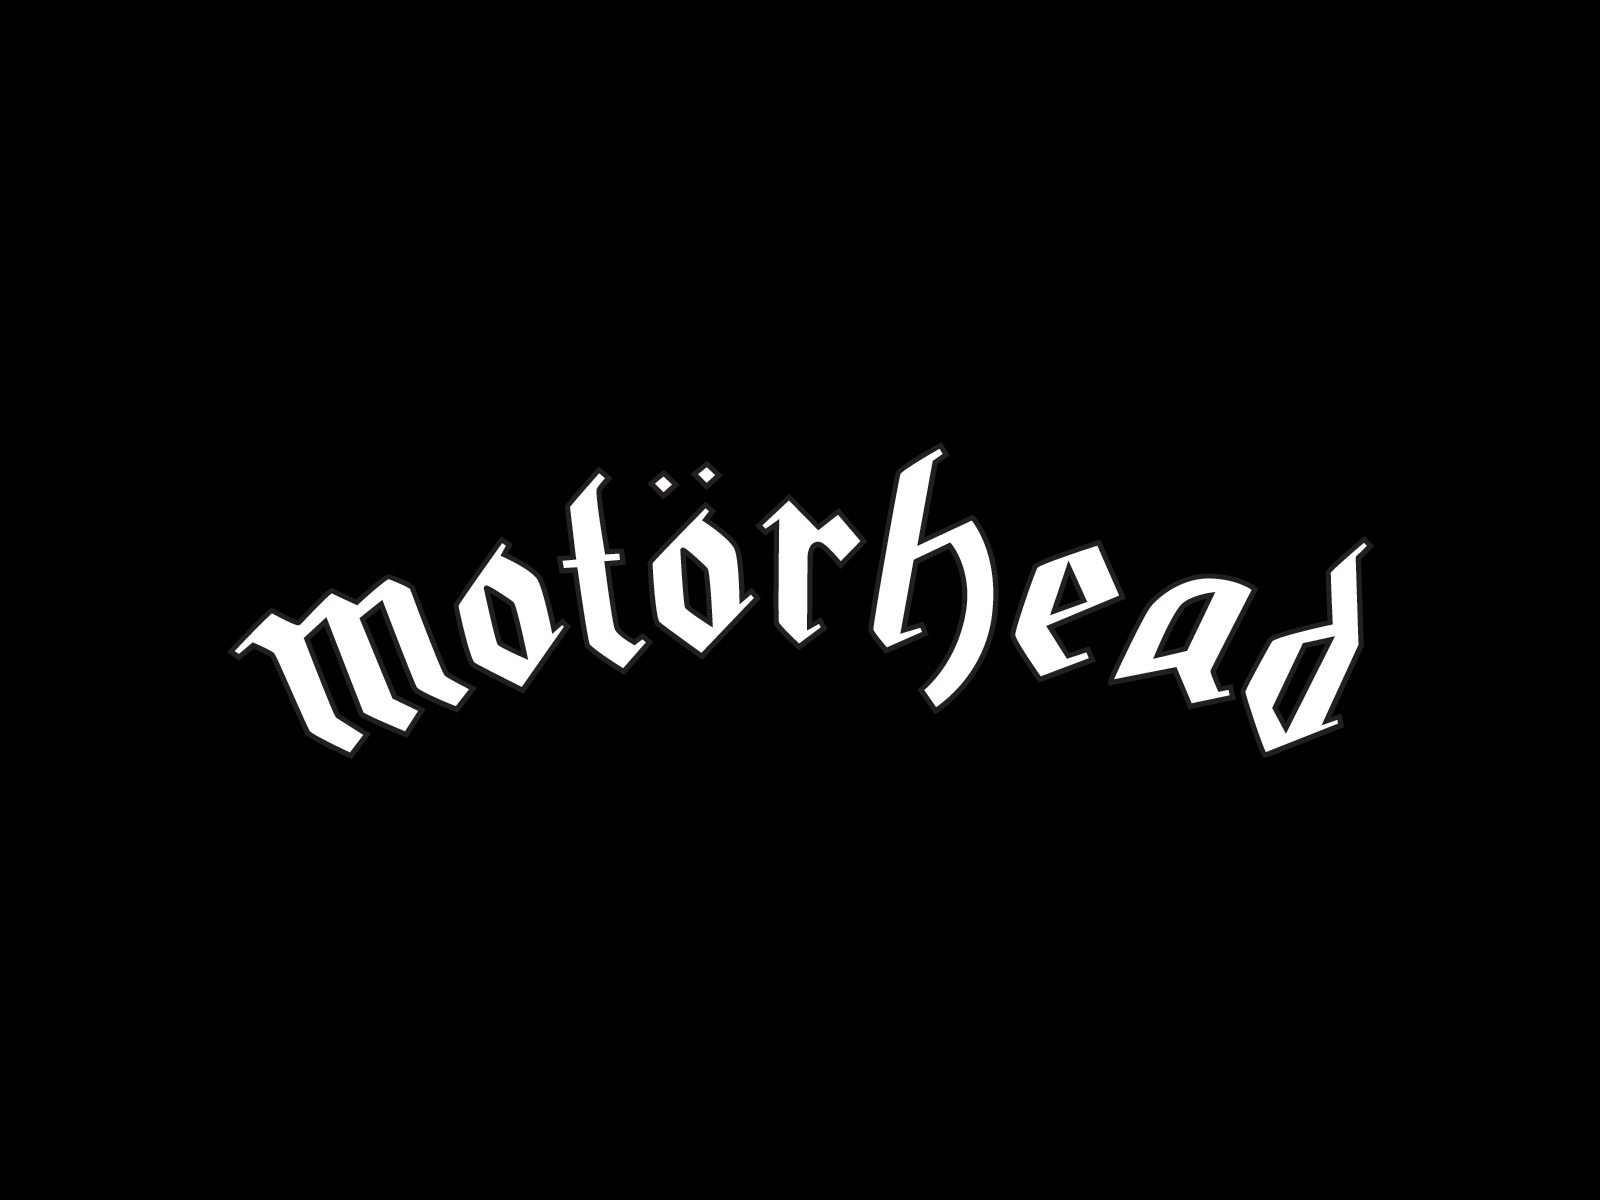 MOTÖRHEAD to Release “Under Cöver” Album on September 1, 2017